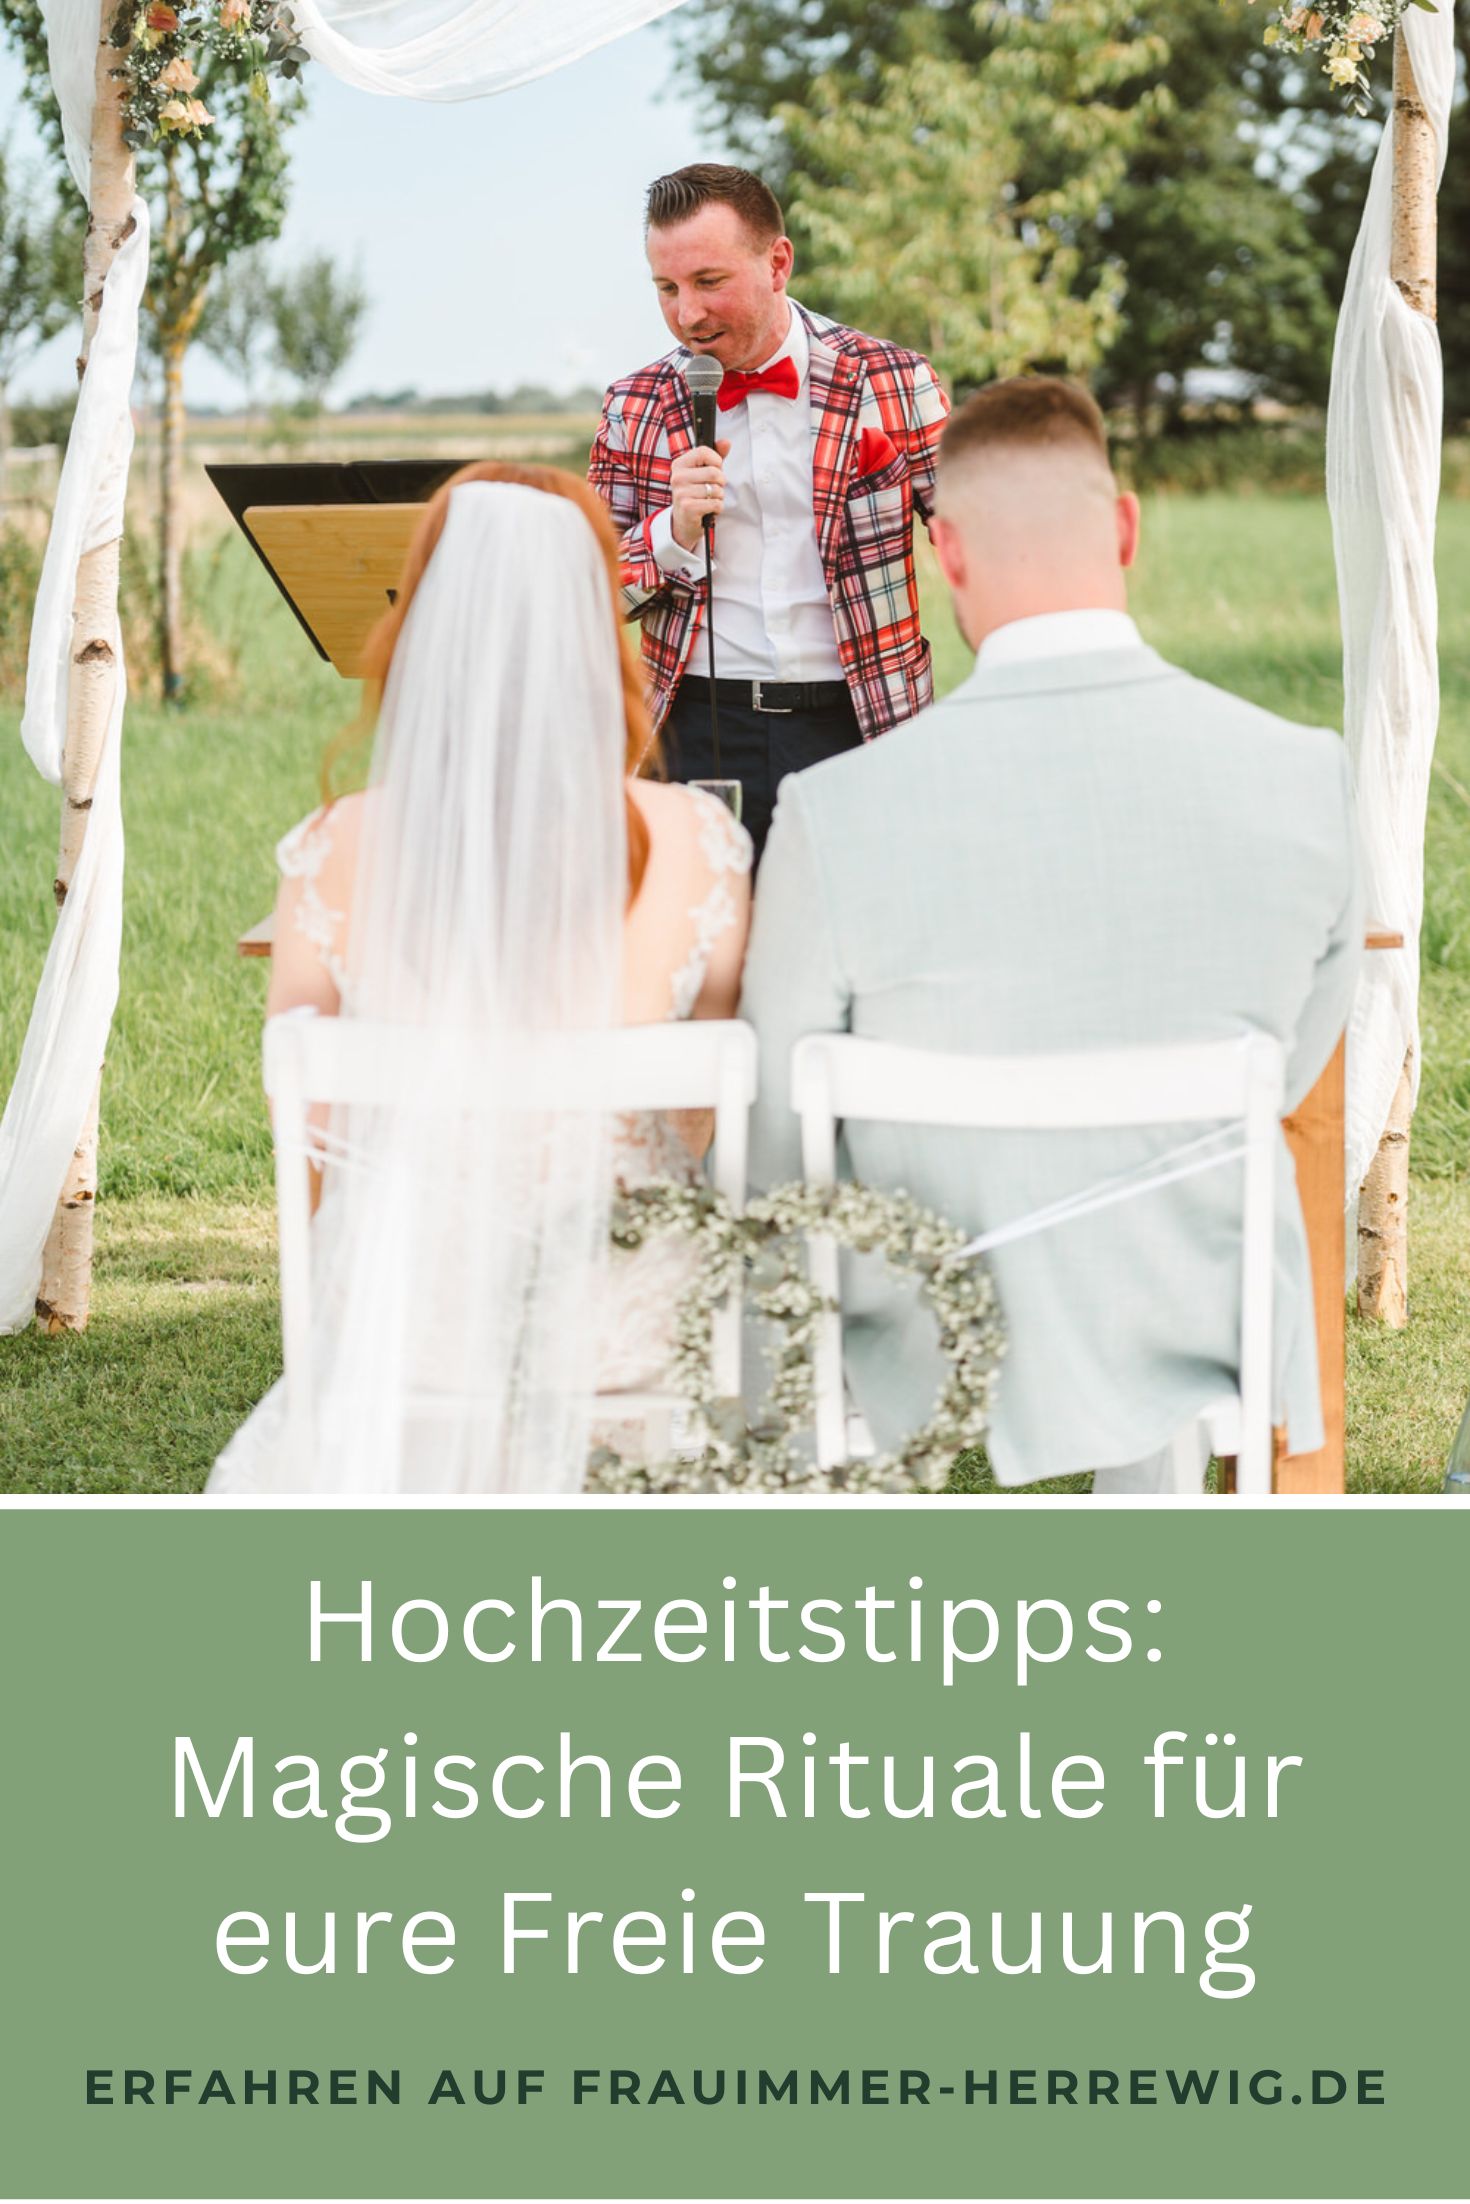 Freie trauung rituale – gesehen bei frauimmer-herrewig.de